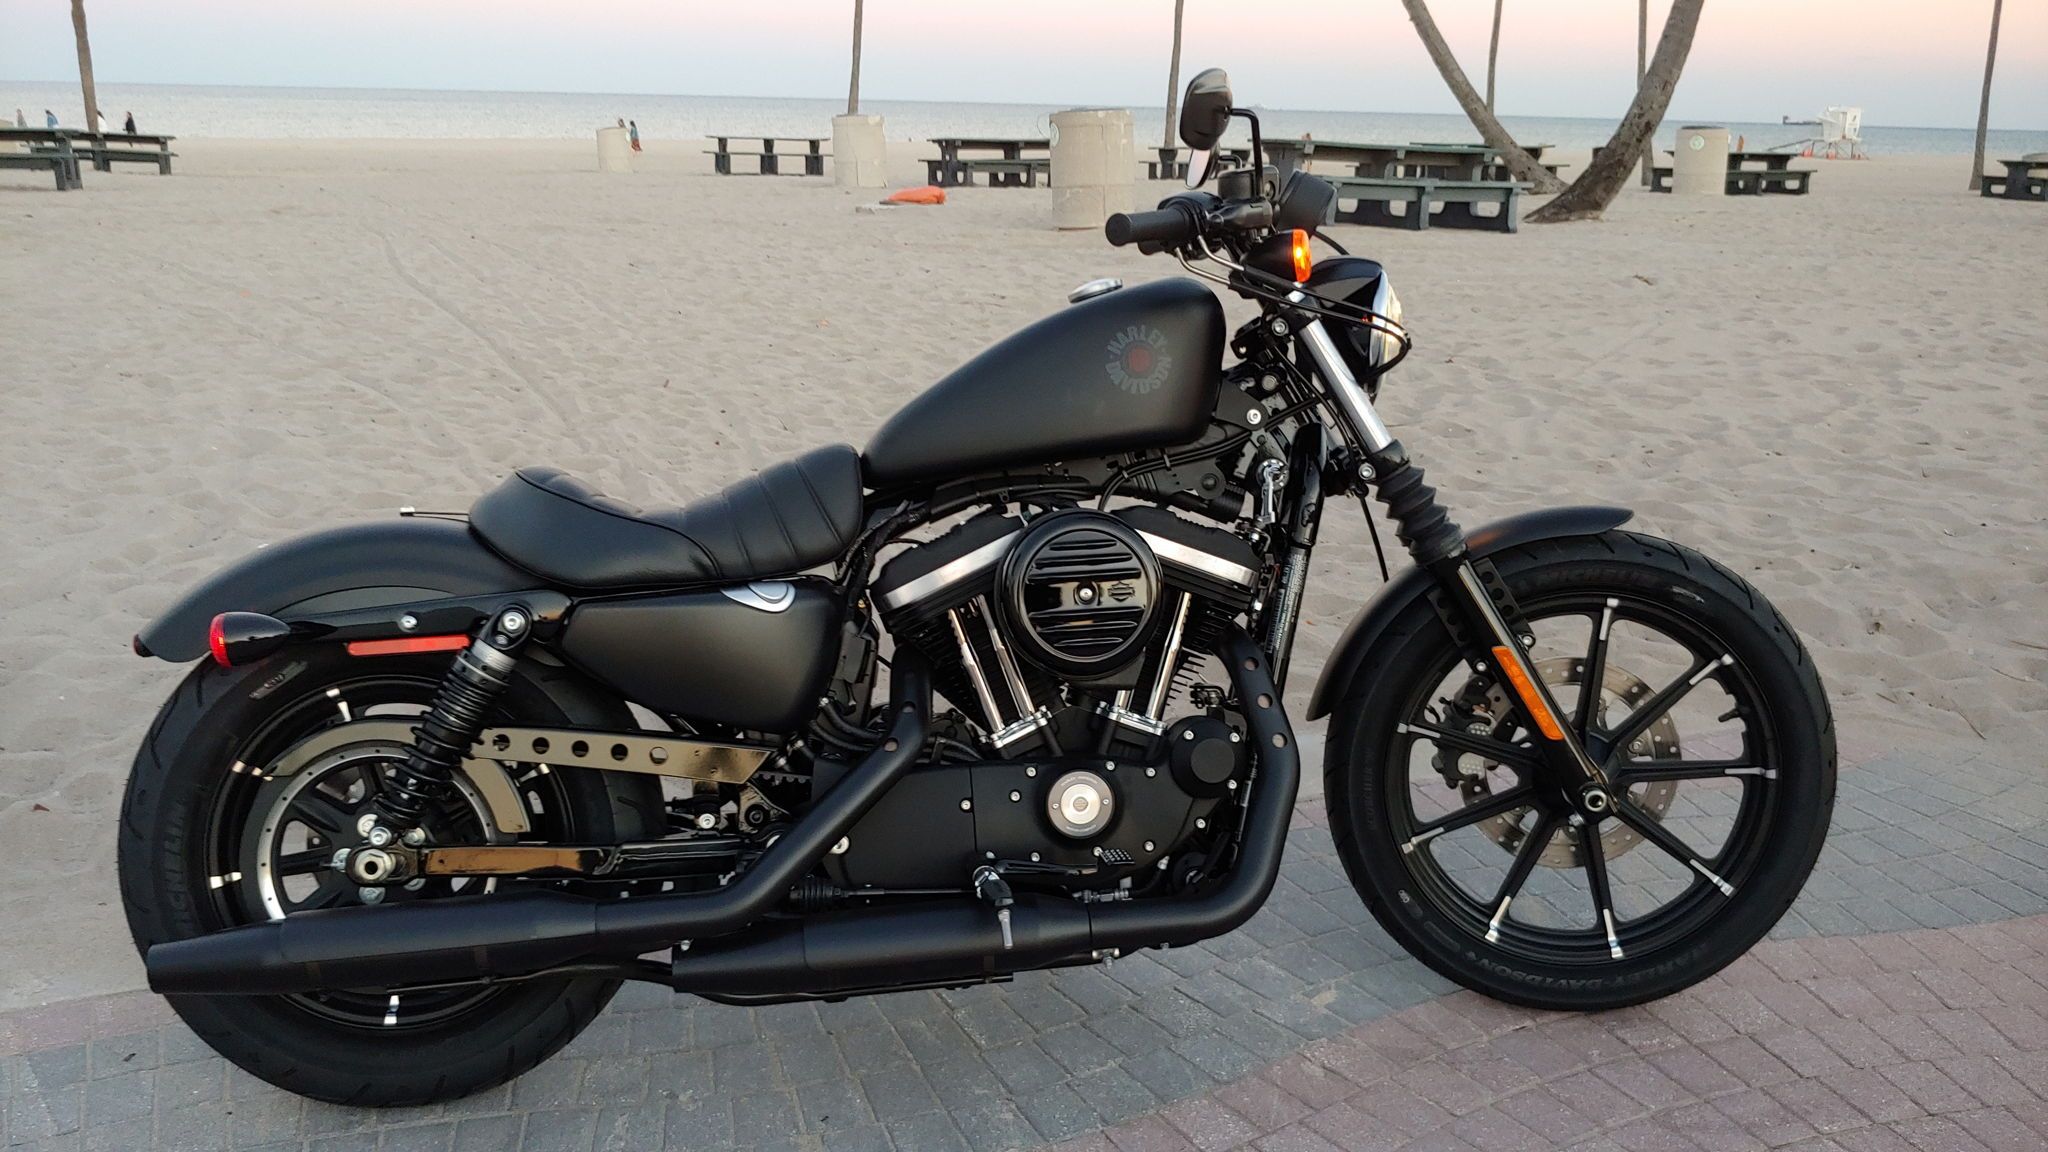 Harley-Davidson Iron 883 at the beach